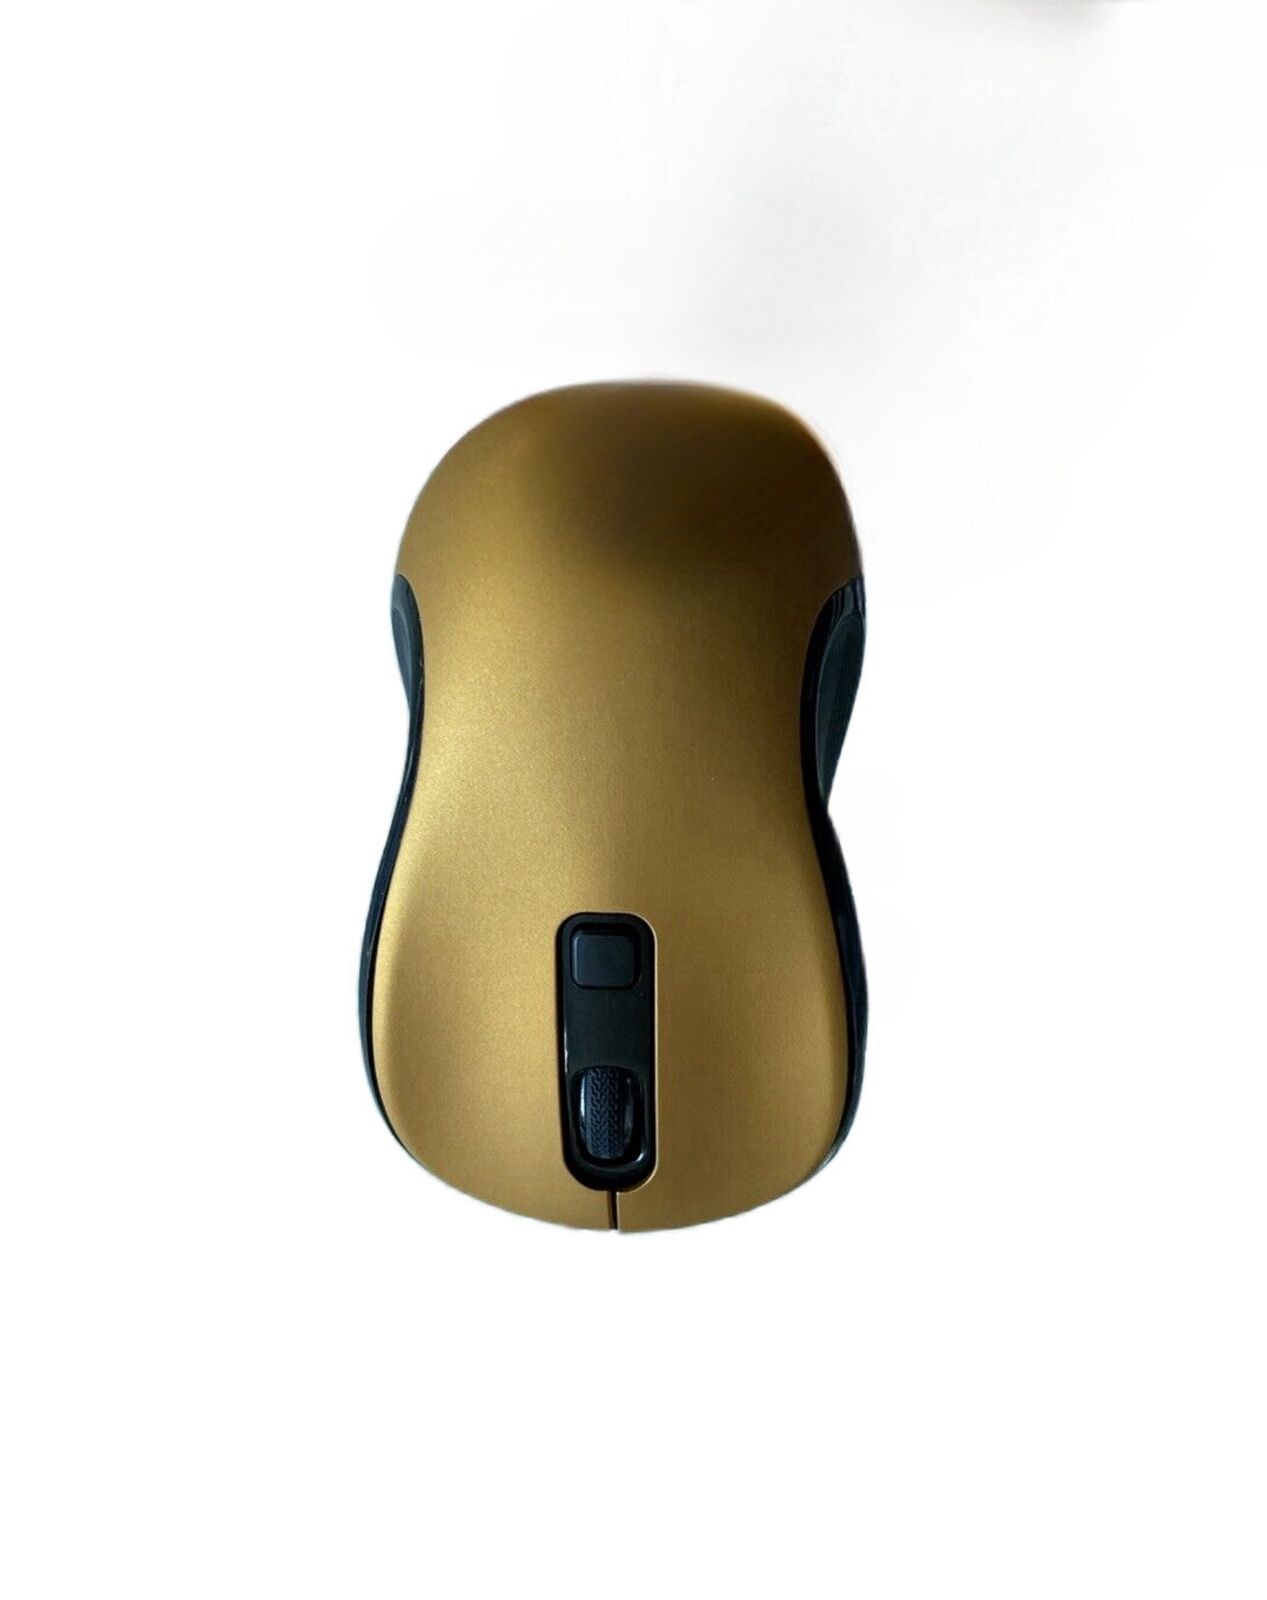 Mini Wireless Bluetooth 2.4GHz Mouse For PC Laptop Sleek Portable